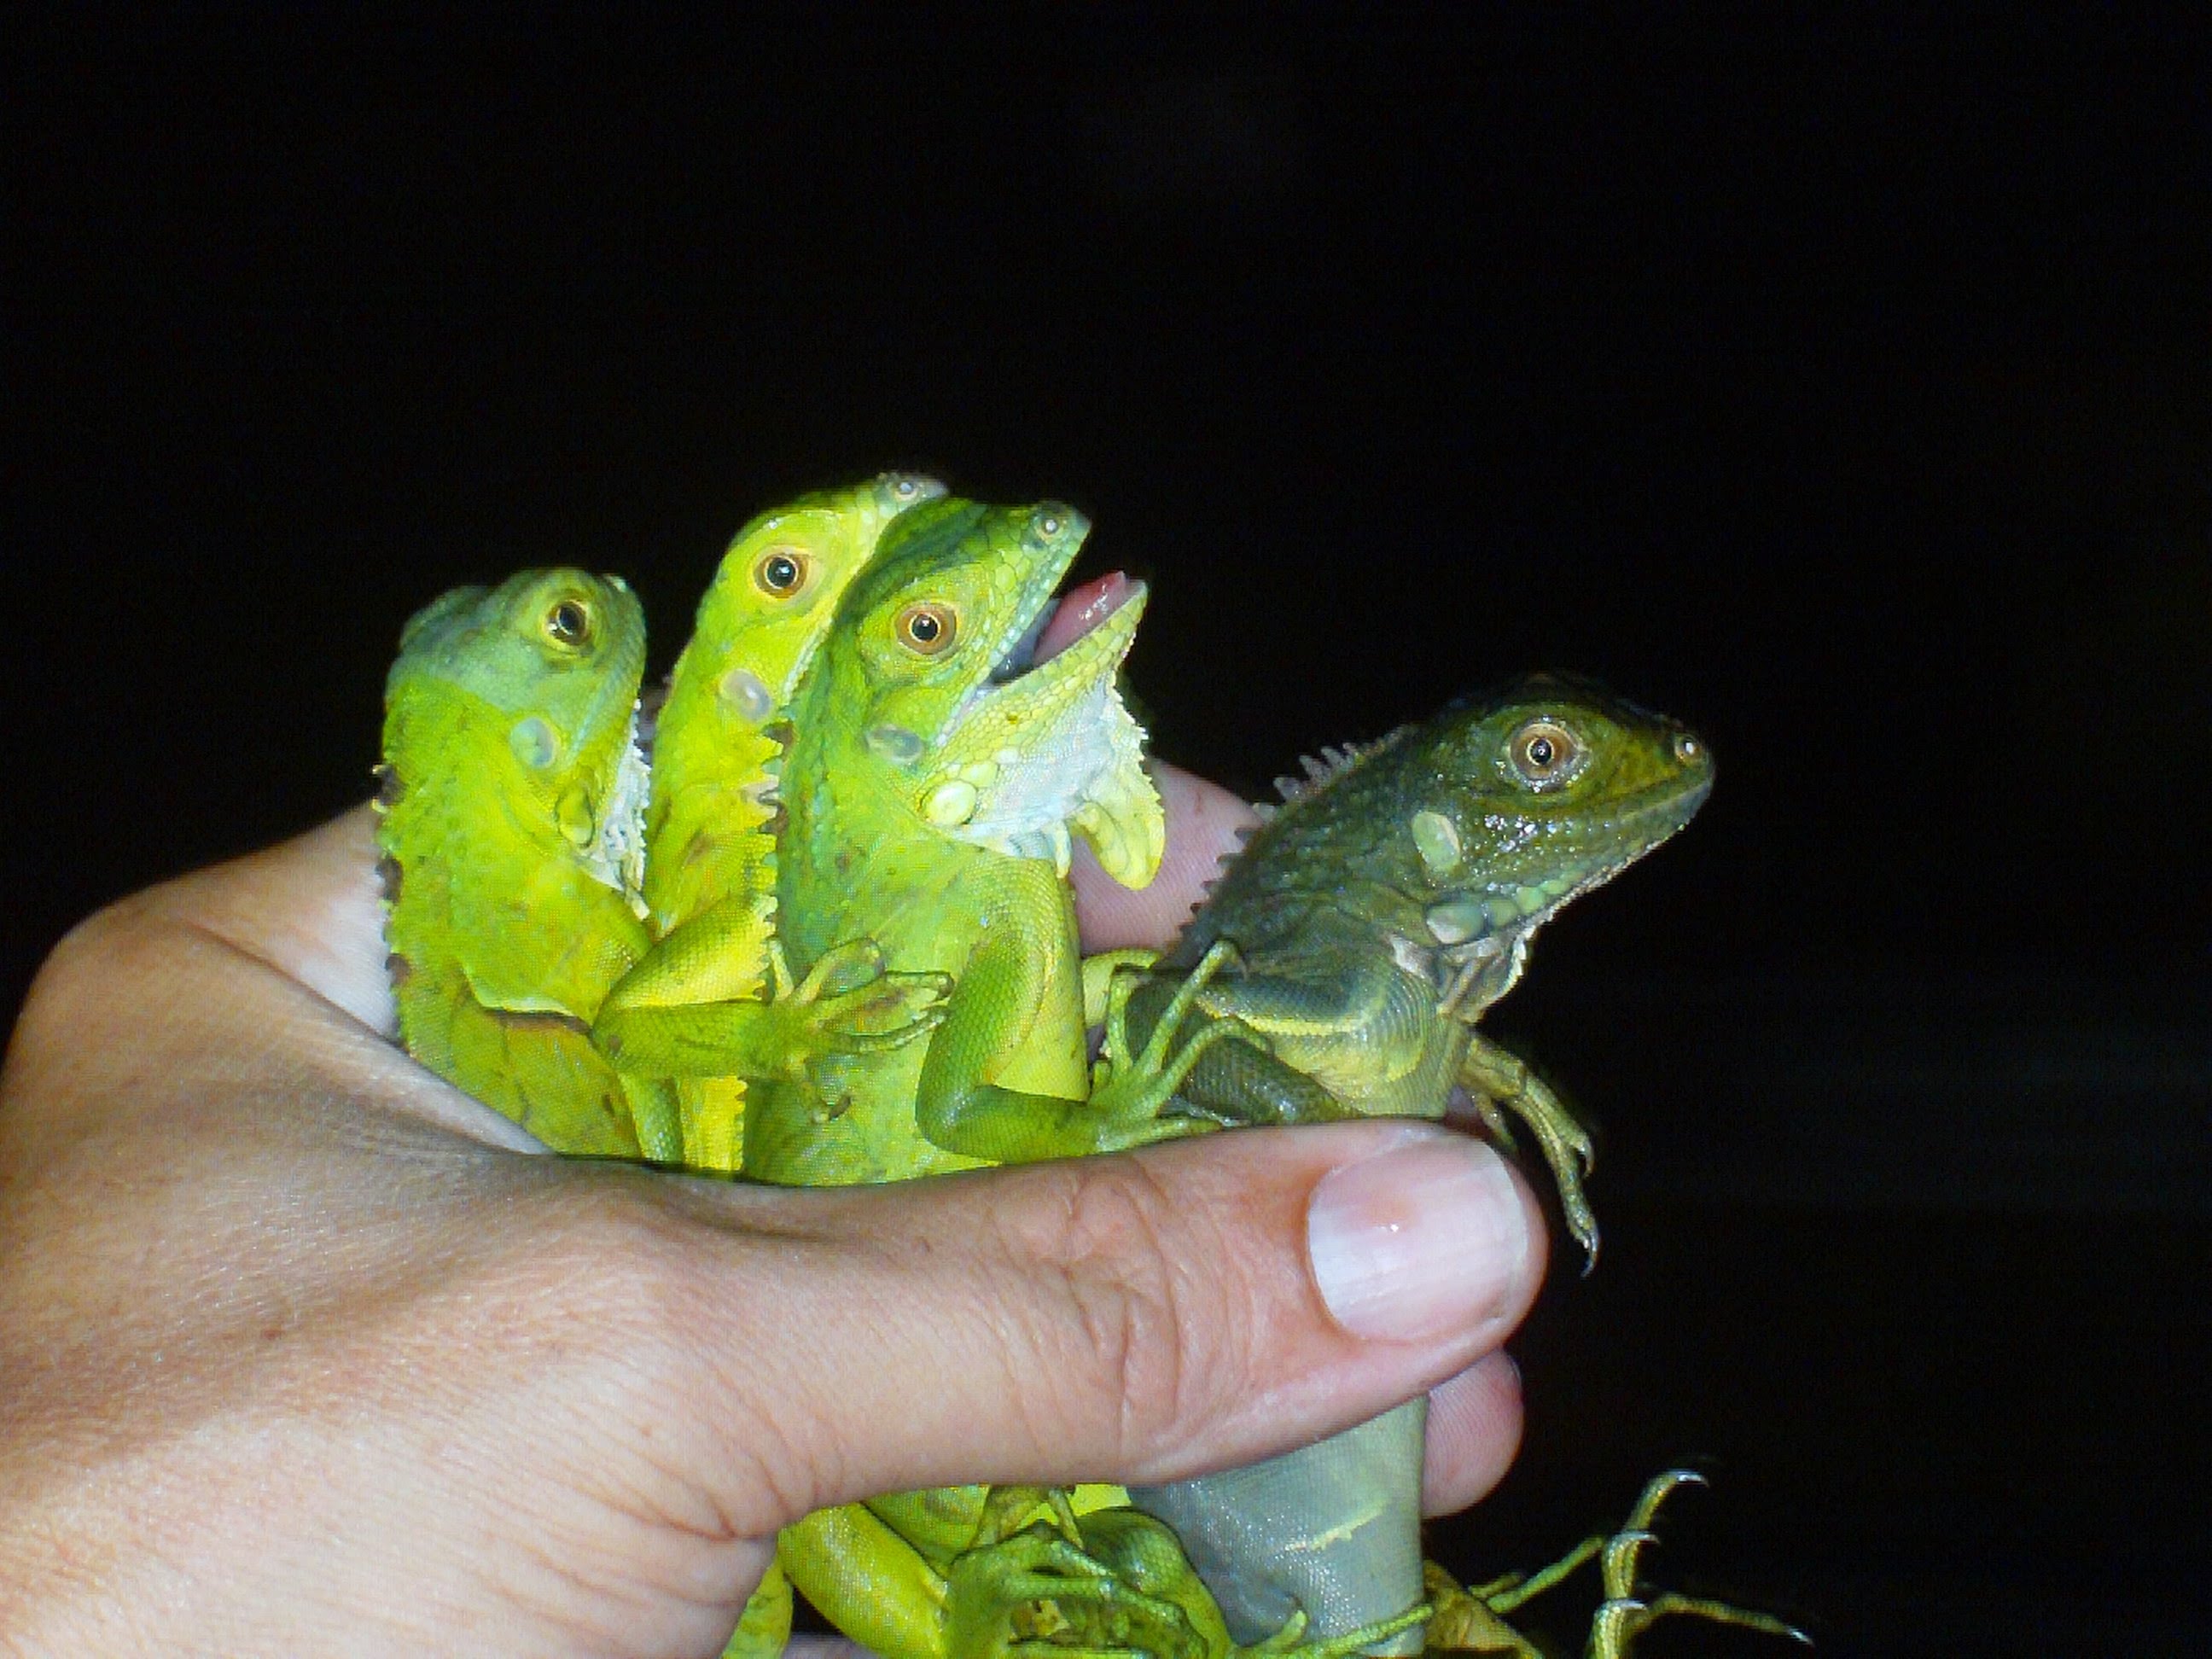 Baby Iguanas wild caught from Florida - YouTube